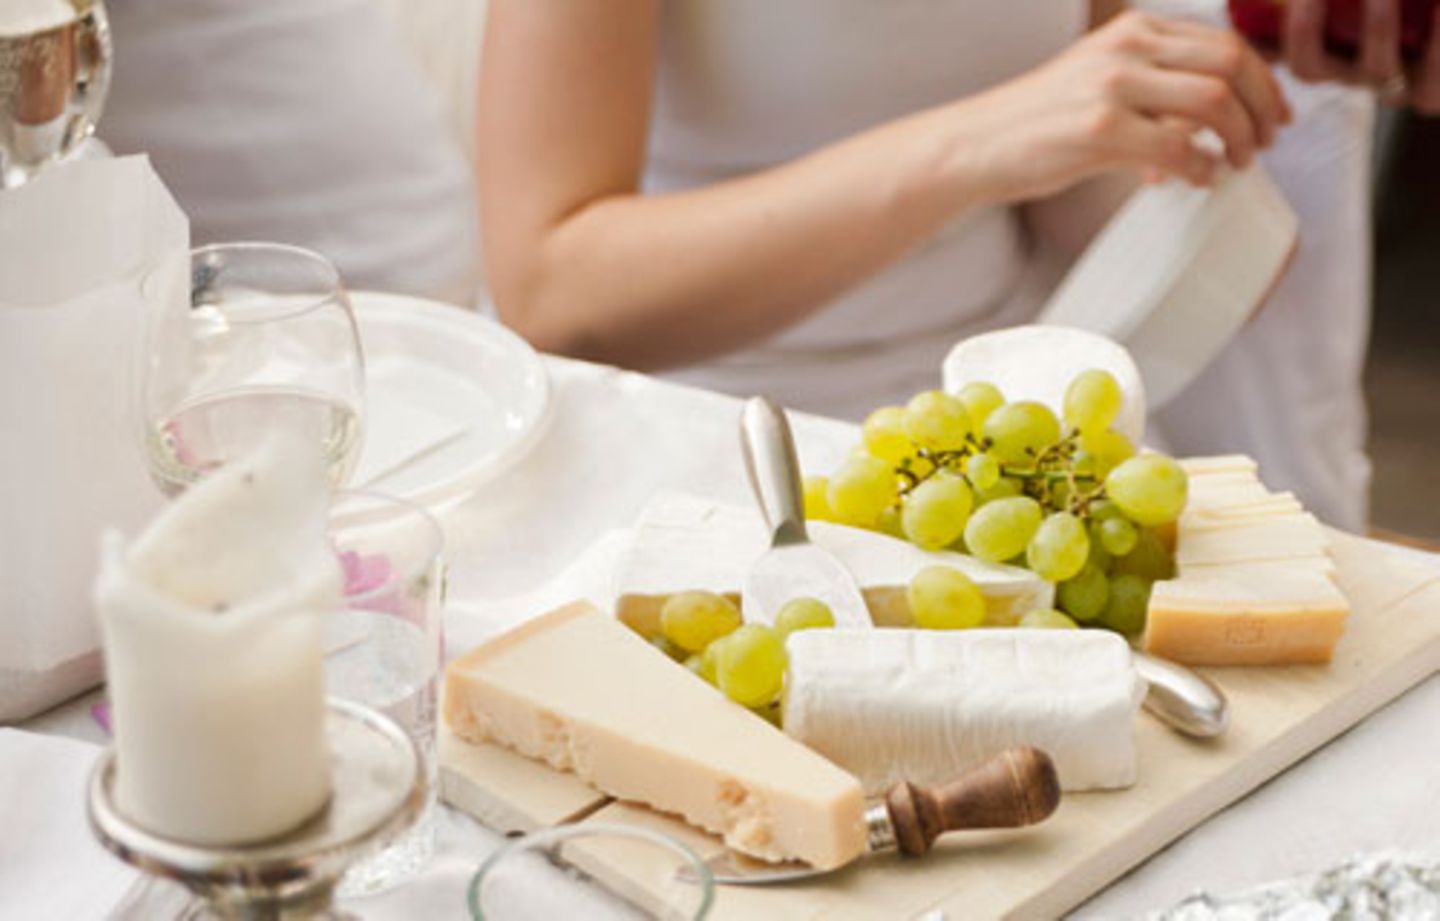 Käseplatte, Kerze, Weintrauben: So geht das Picknick à la français.